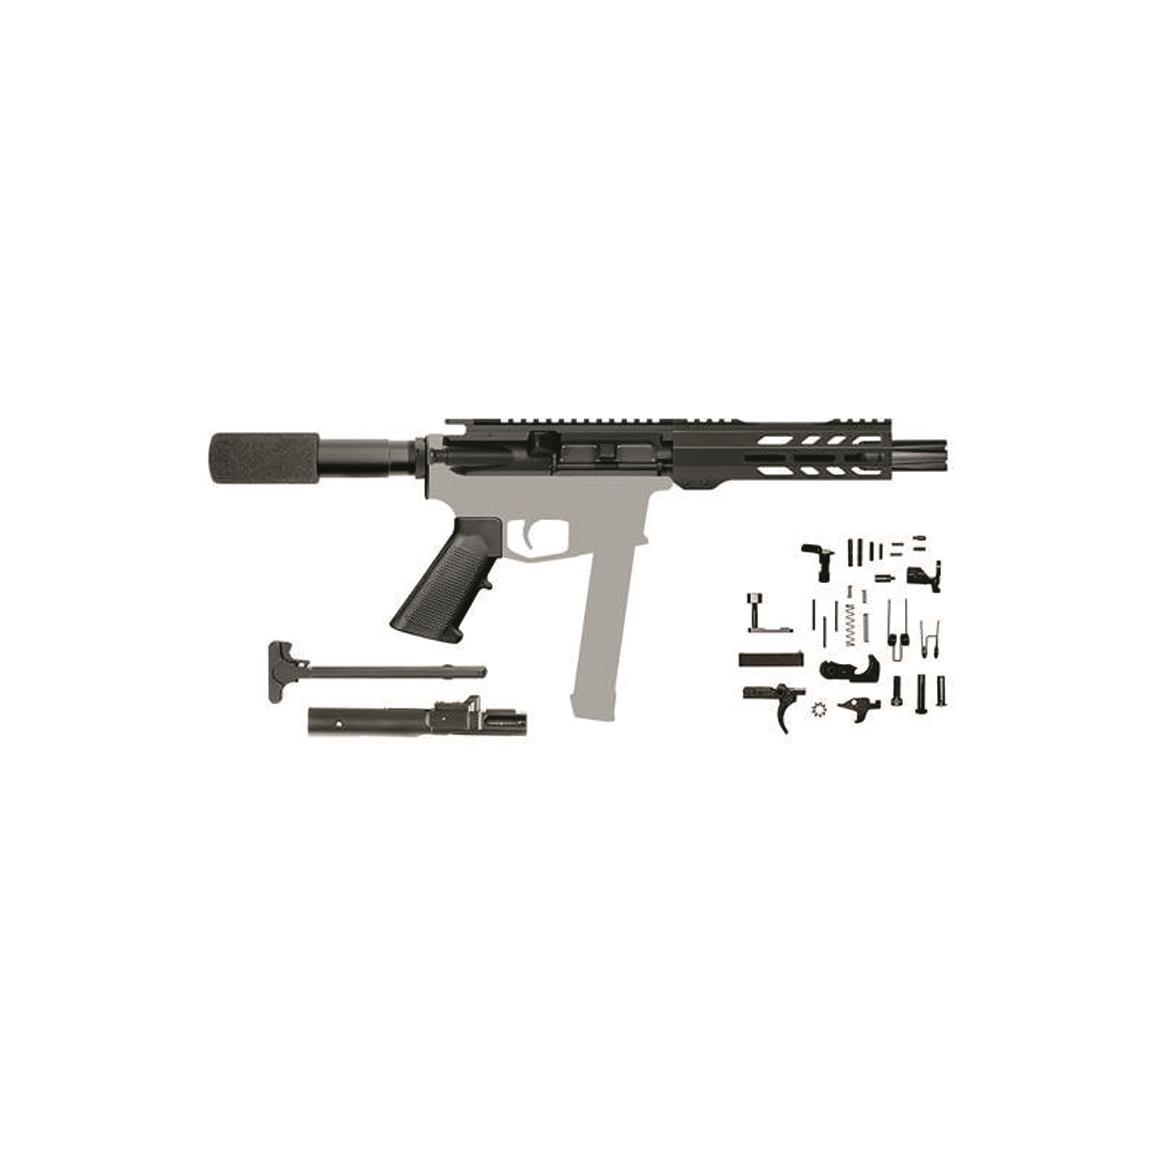 CBC AR-15 Pistol Kit, Semi-automatic, 9mm, 7.5" Barrel, No Stripped Lower or Magazine